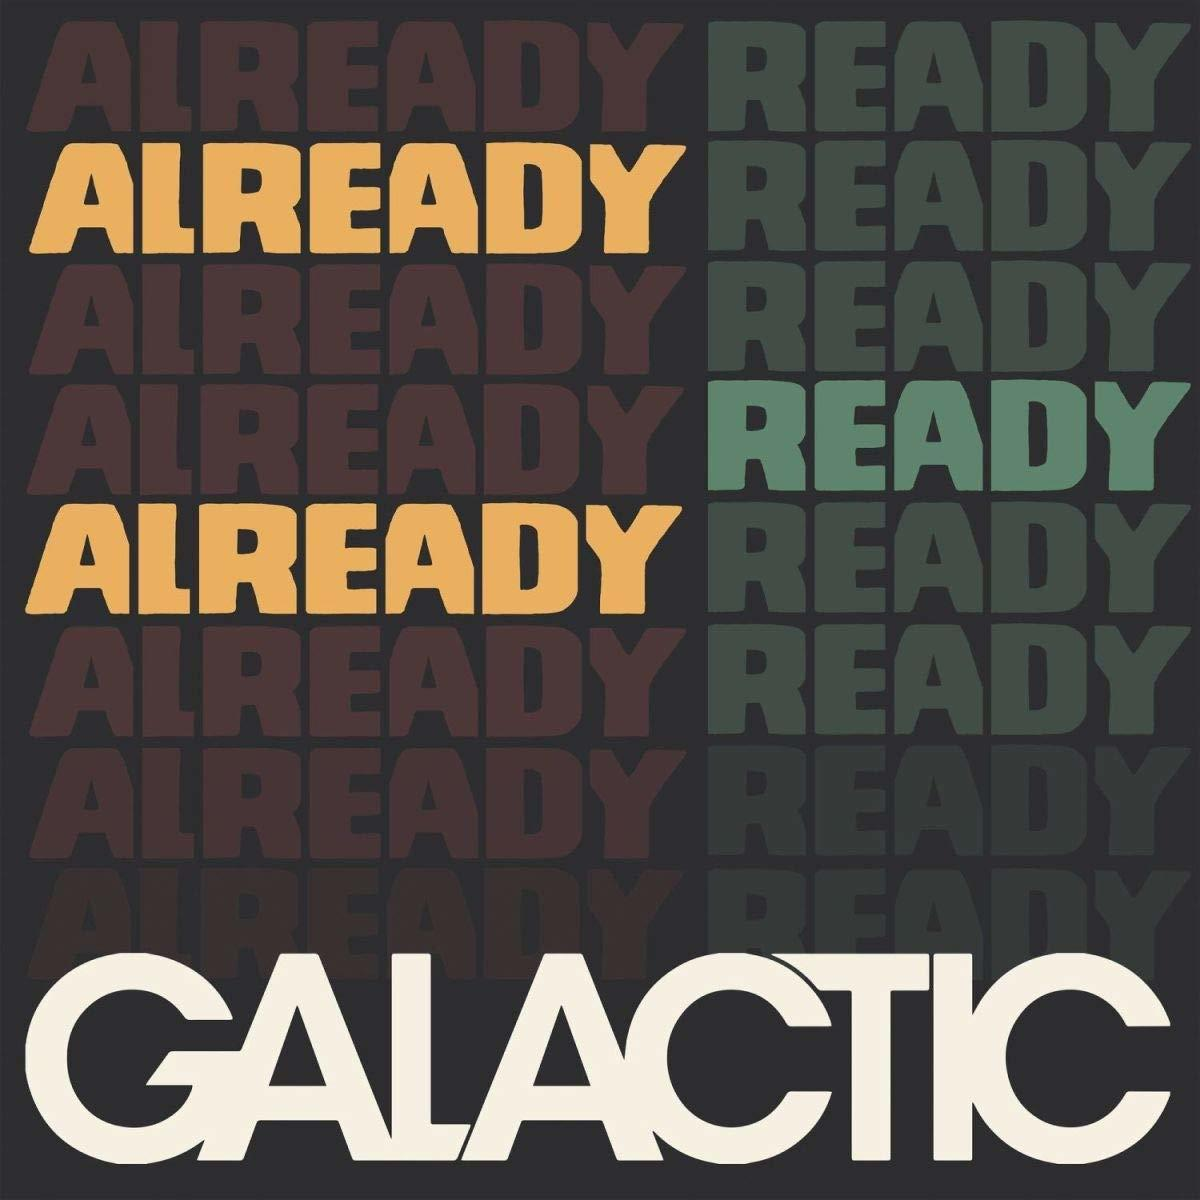 Galactic - Already Ready Already (Vinyl) (LP) 